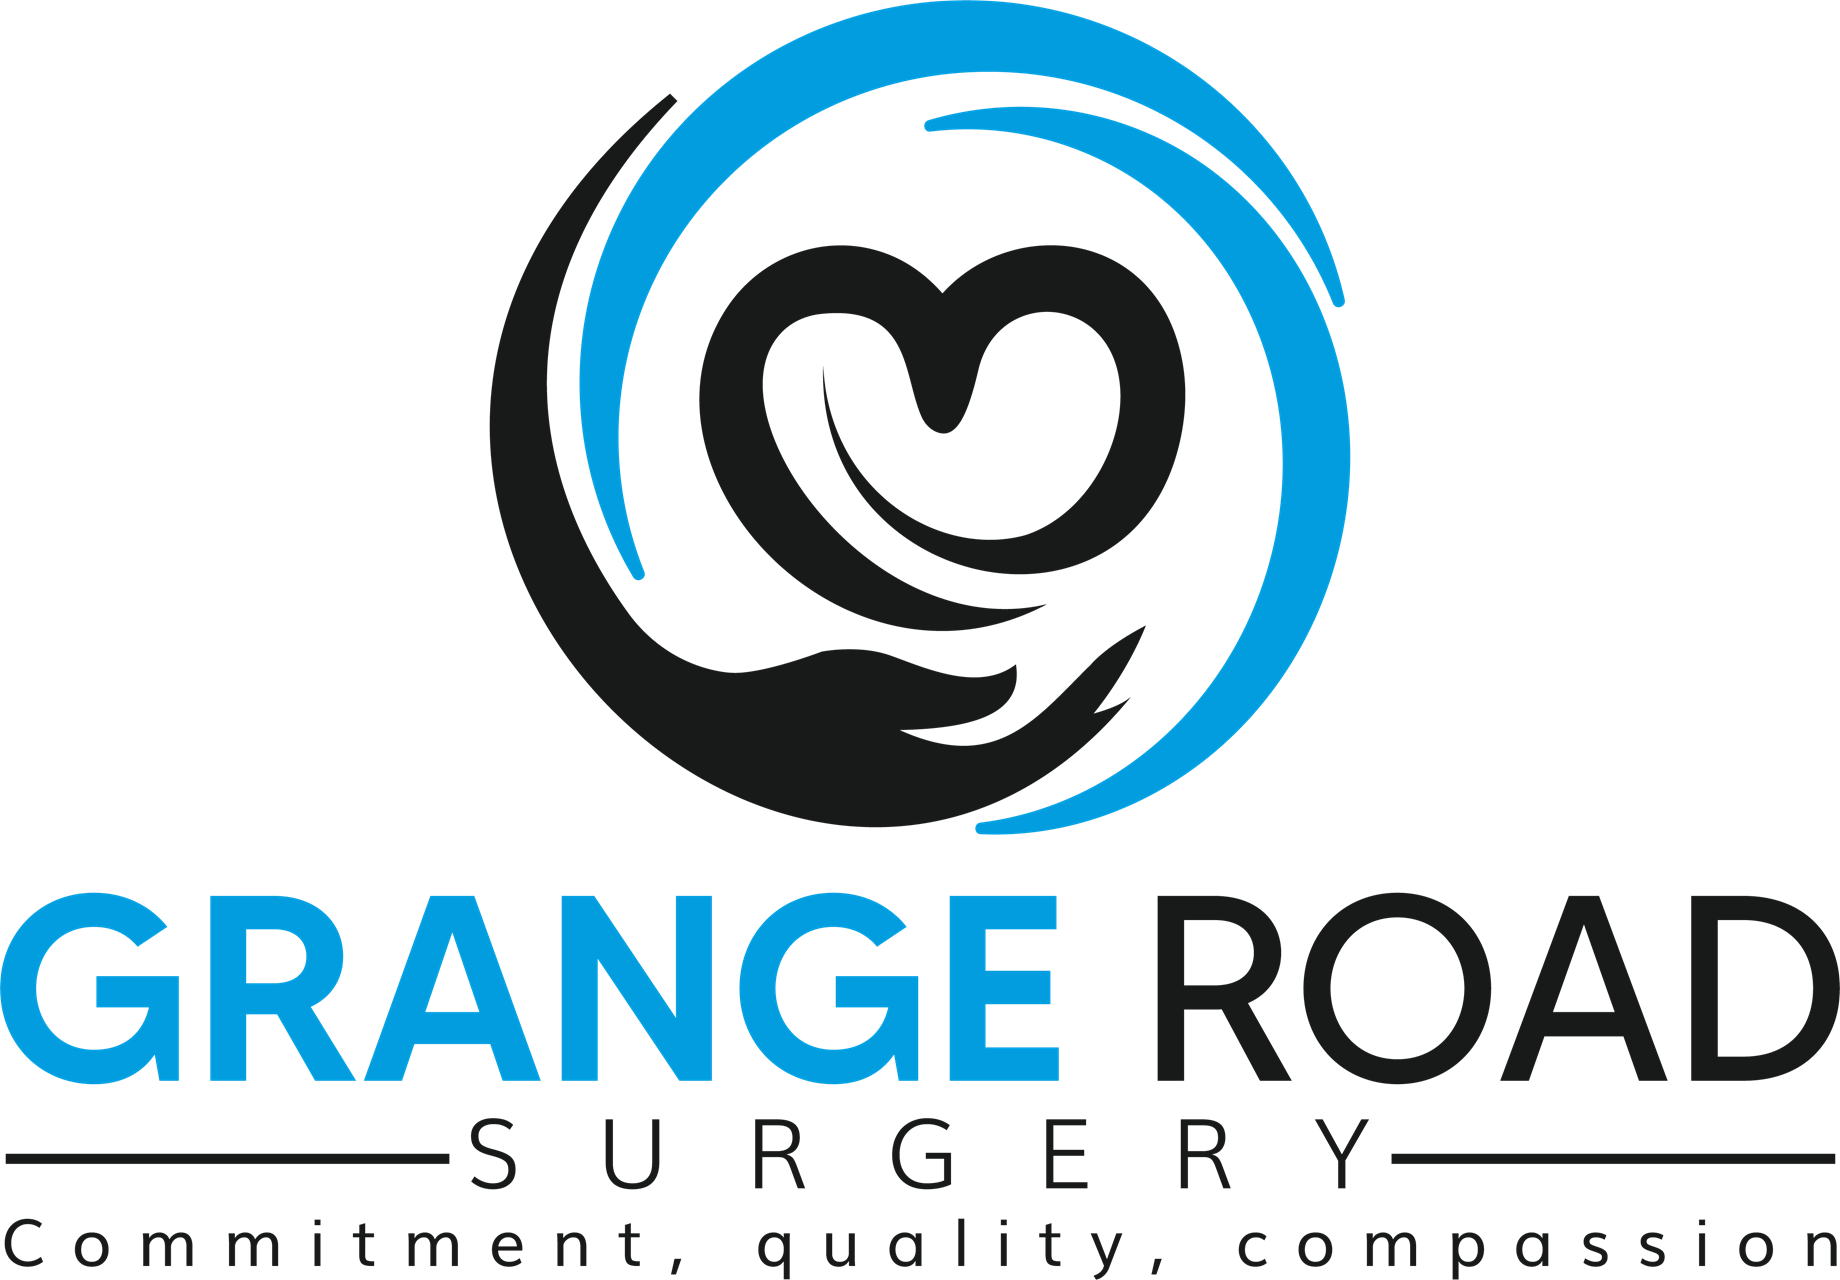 Grange Road Surgery Logo